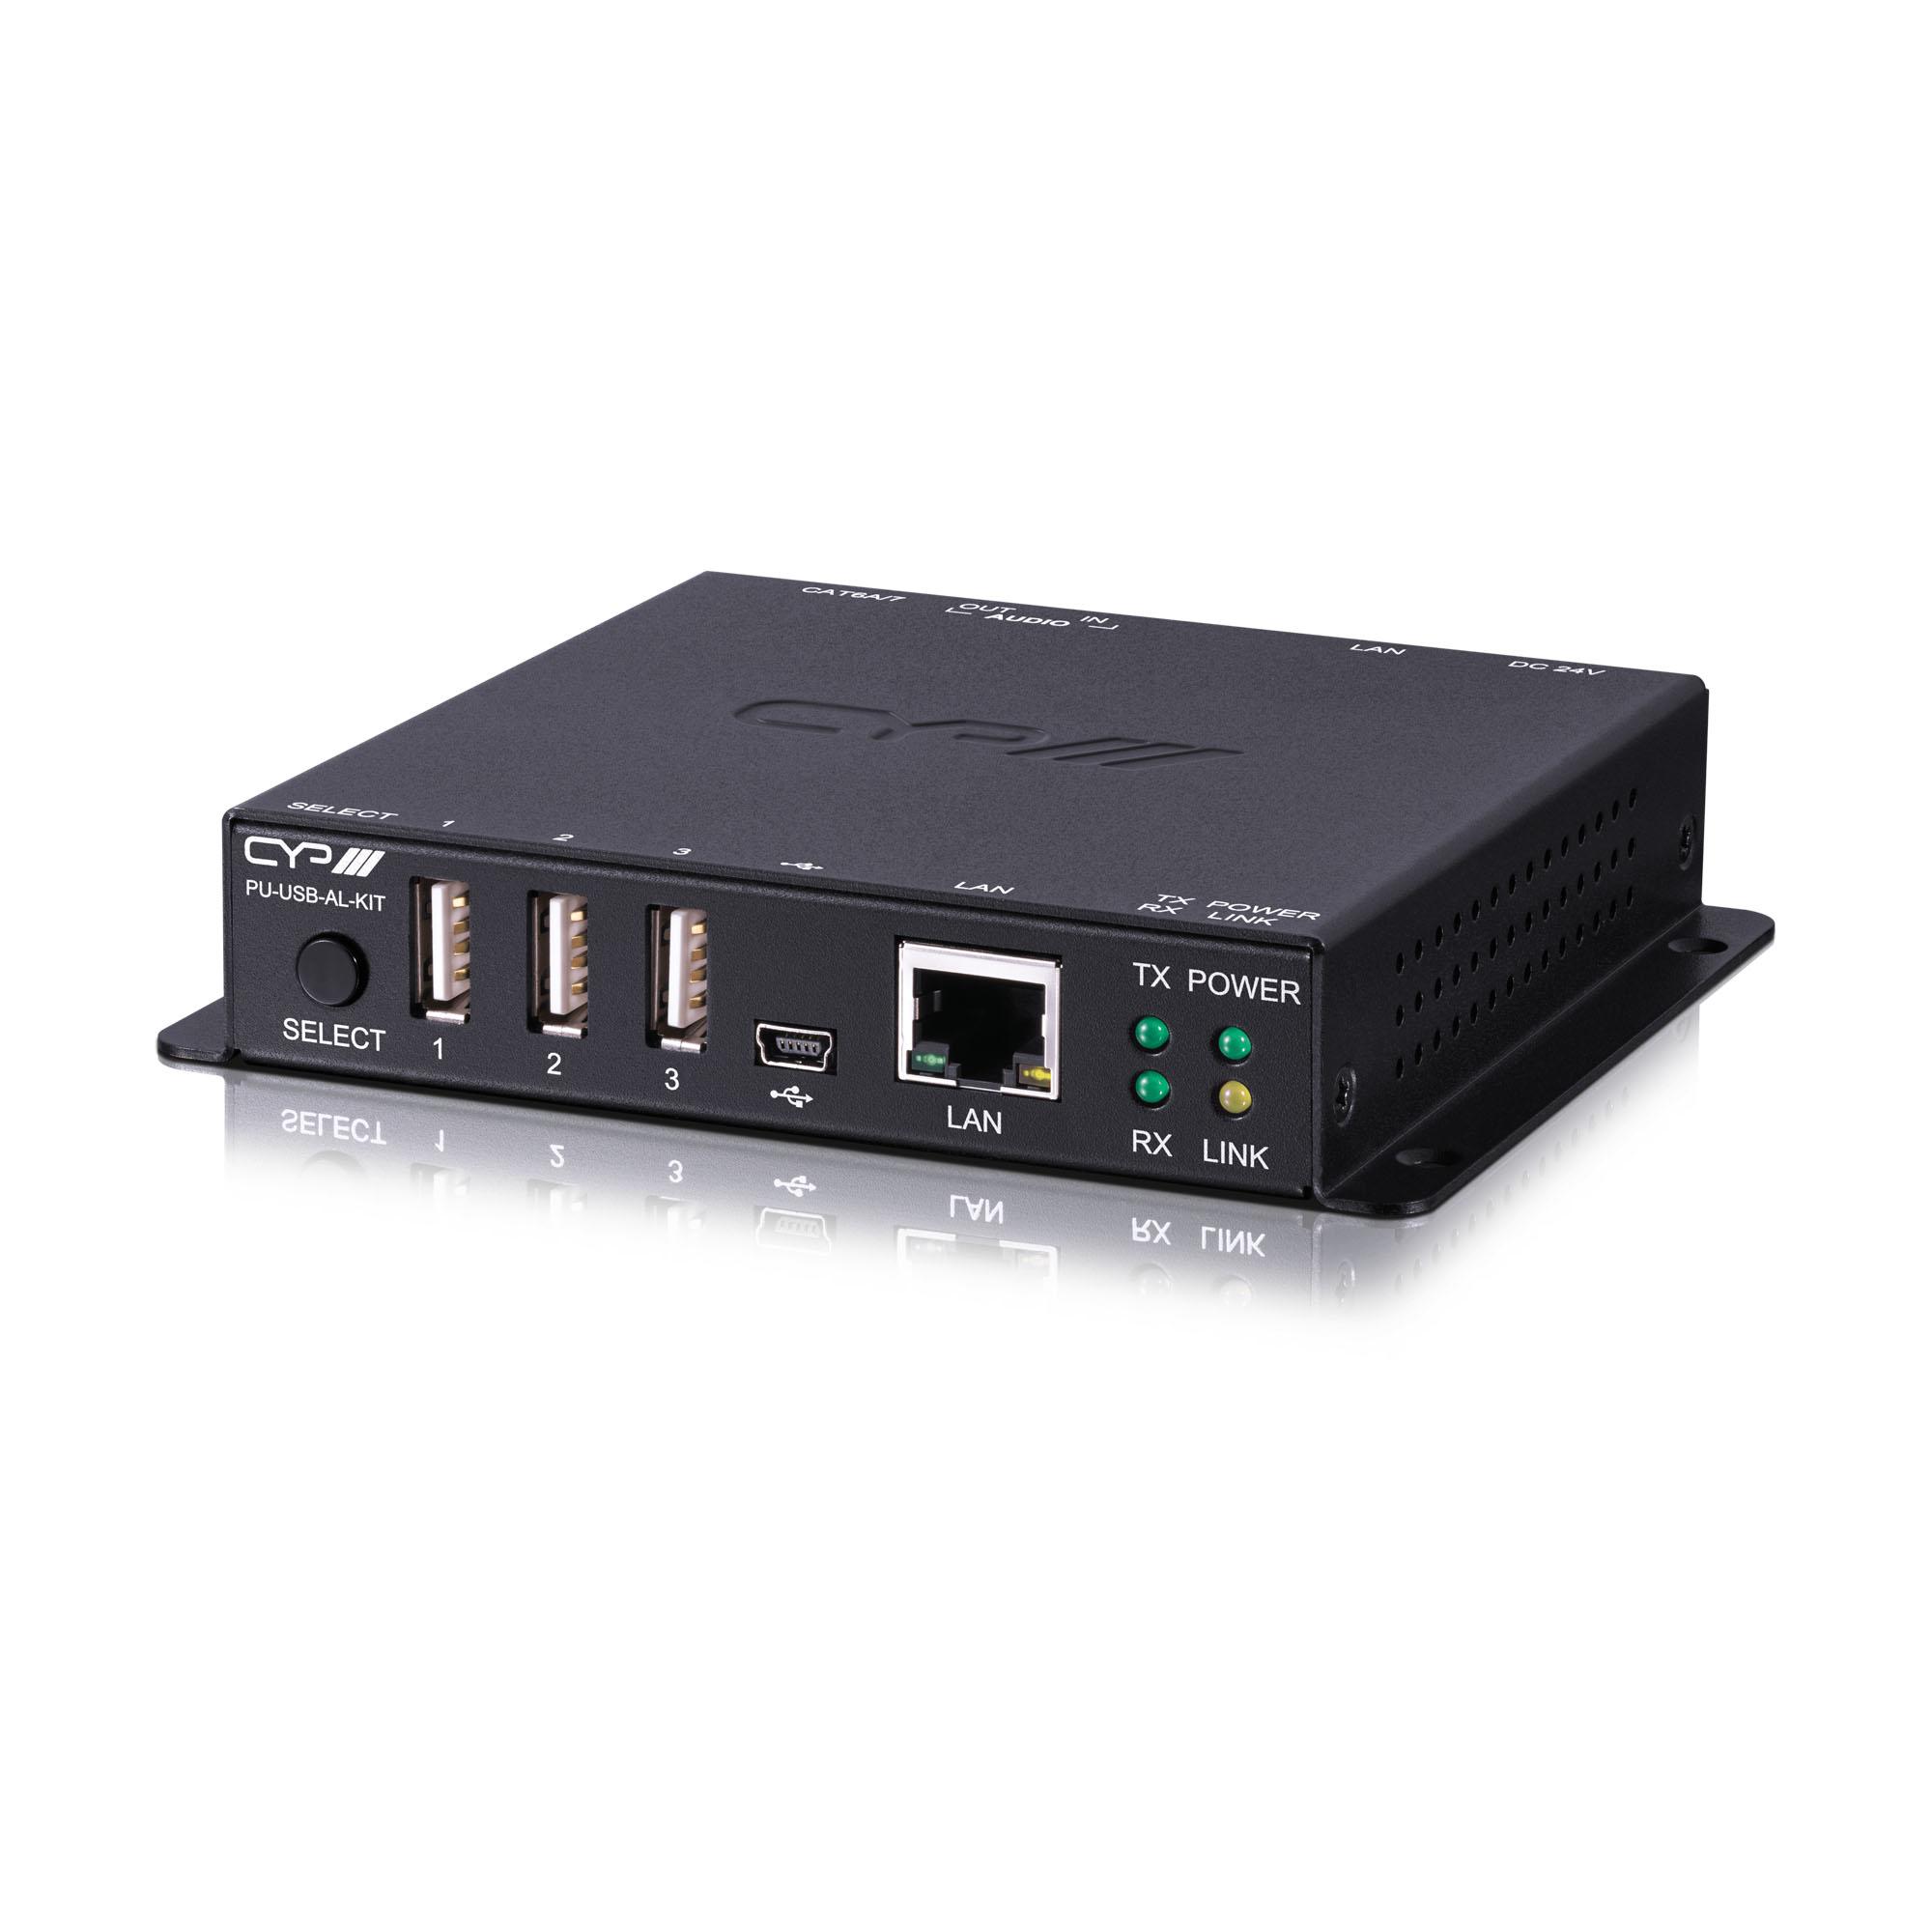 PU-USB-AL-KIT USB 2.0 Hub Transceiver with Audio/LAN (pair)